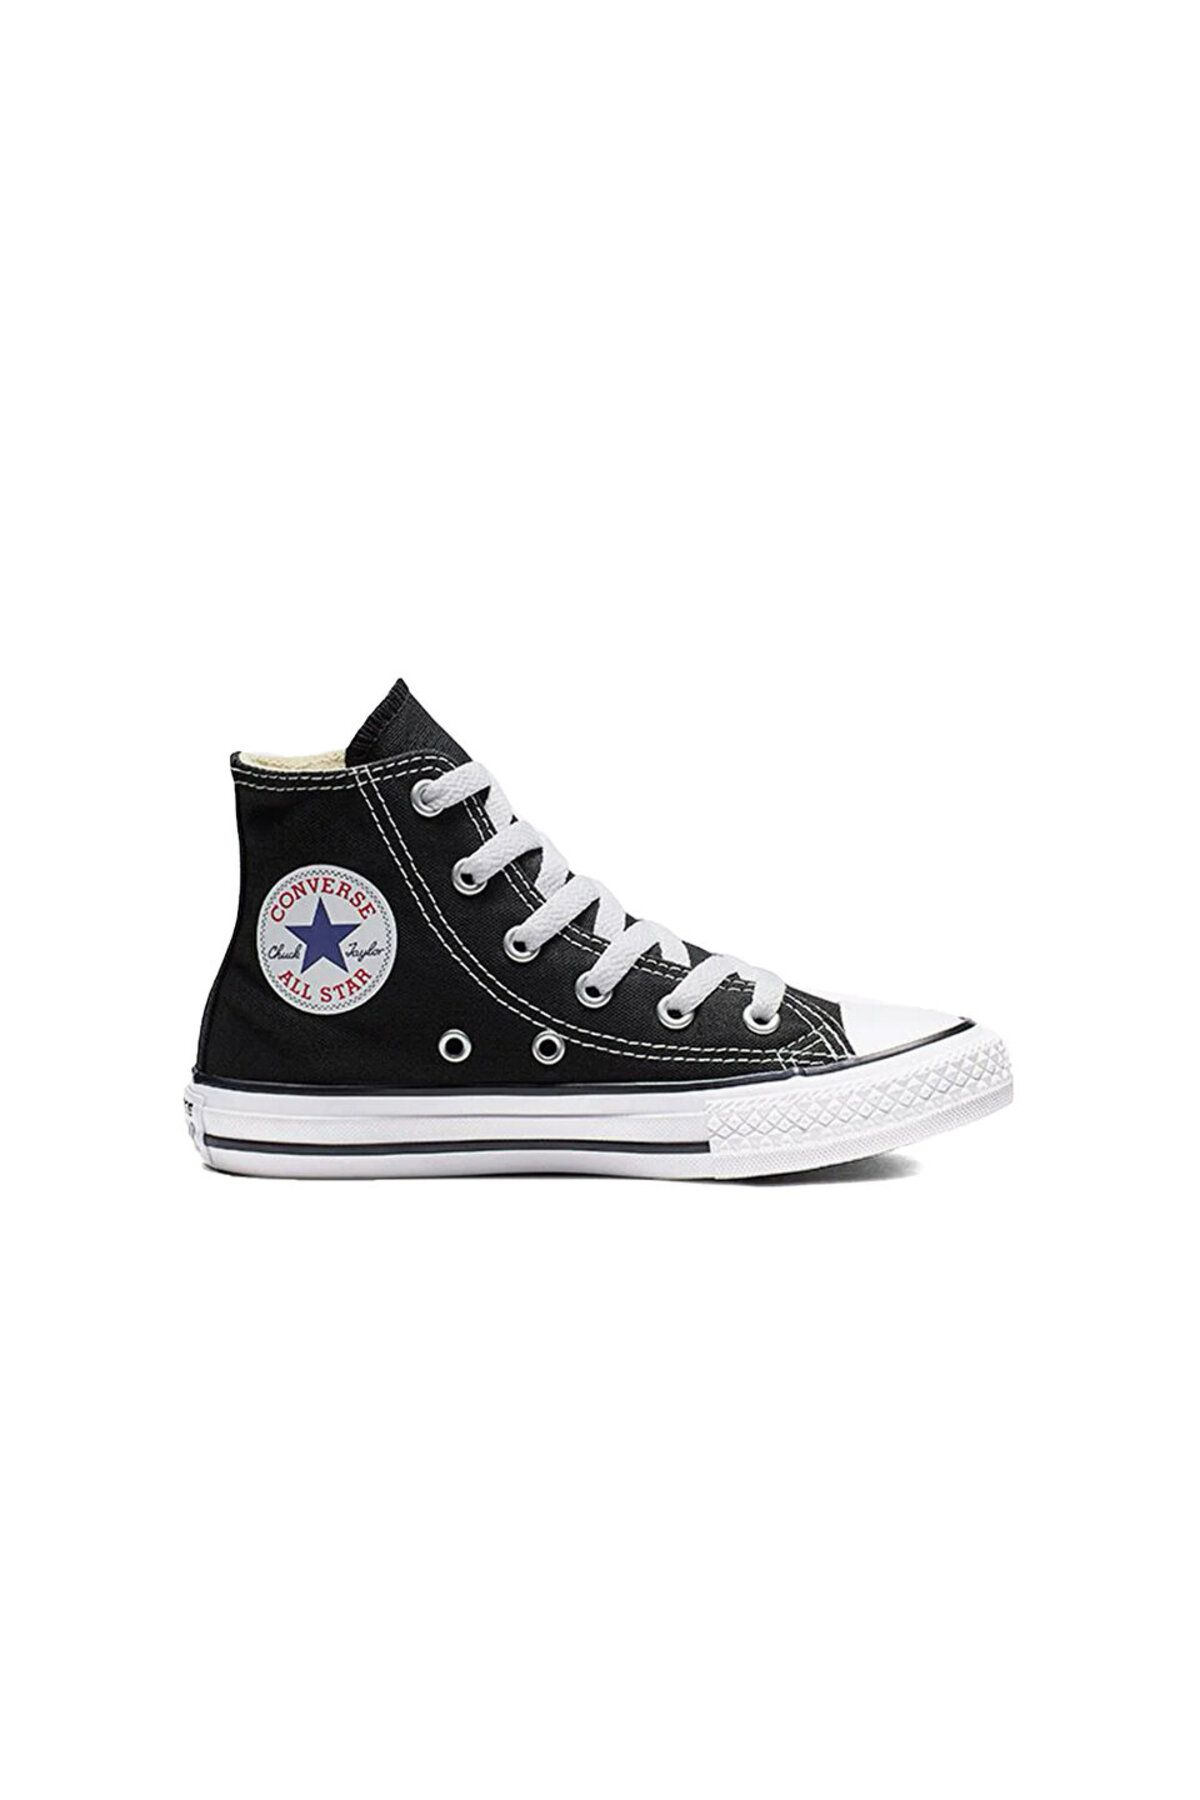 Converse Chuck Taylor All Star Çocuk Günlük Ayakkabı 3J231C Siyah